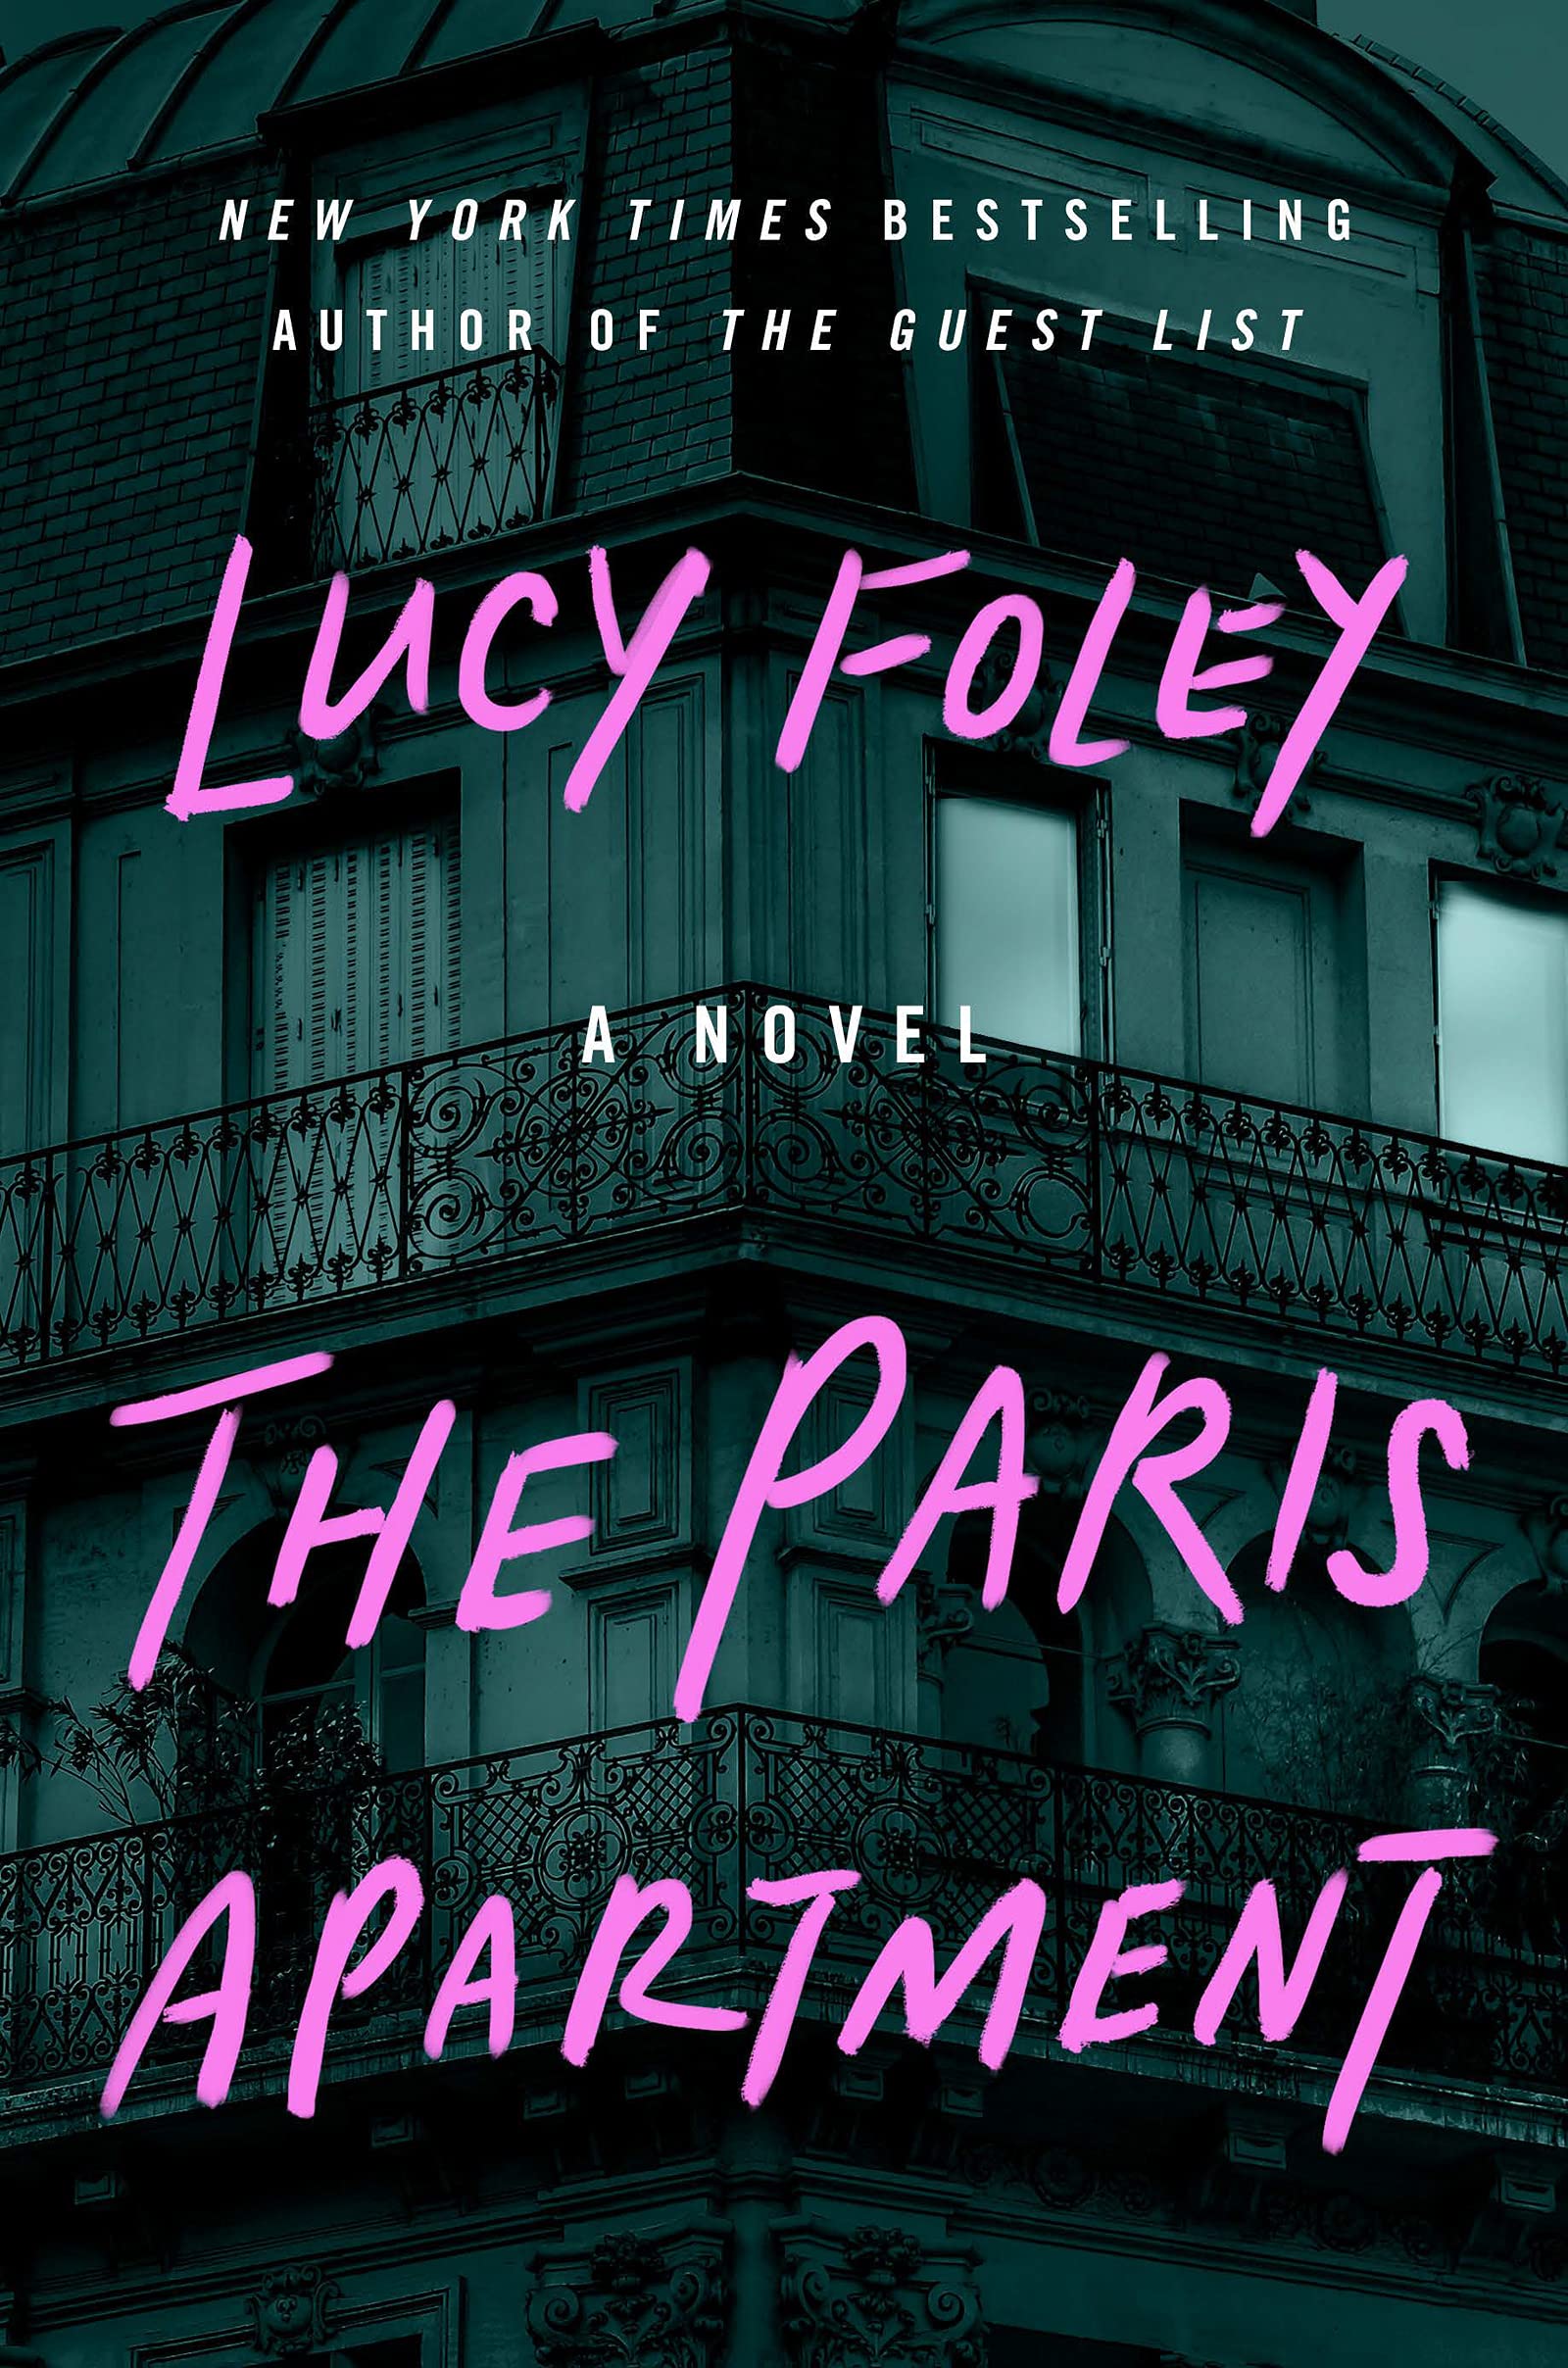 Image for "The Paris Apartment"